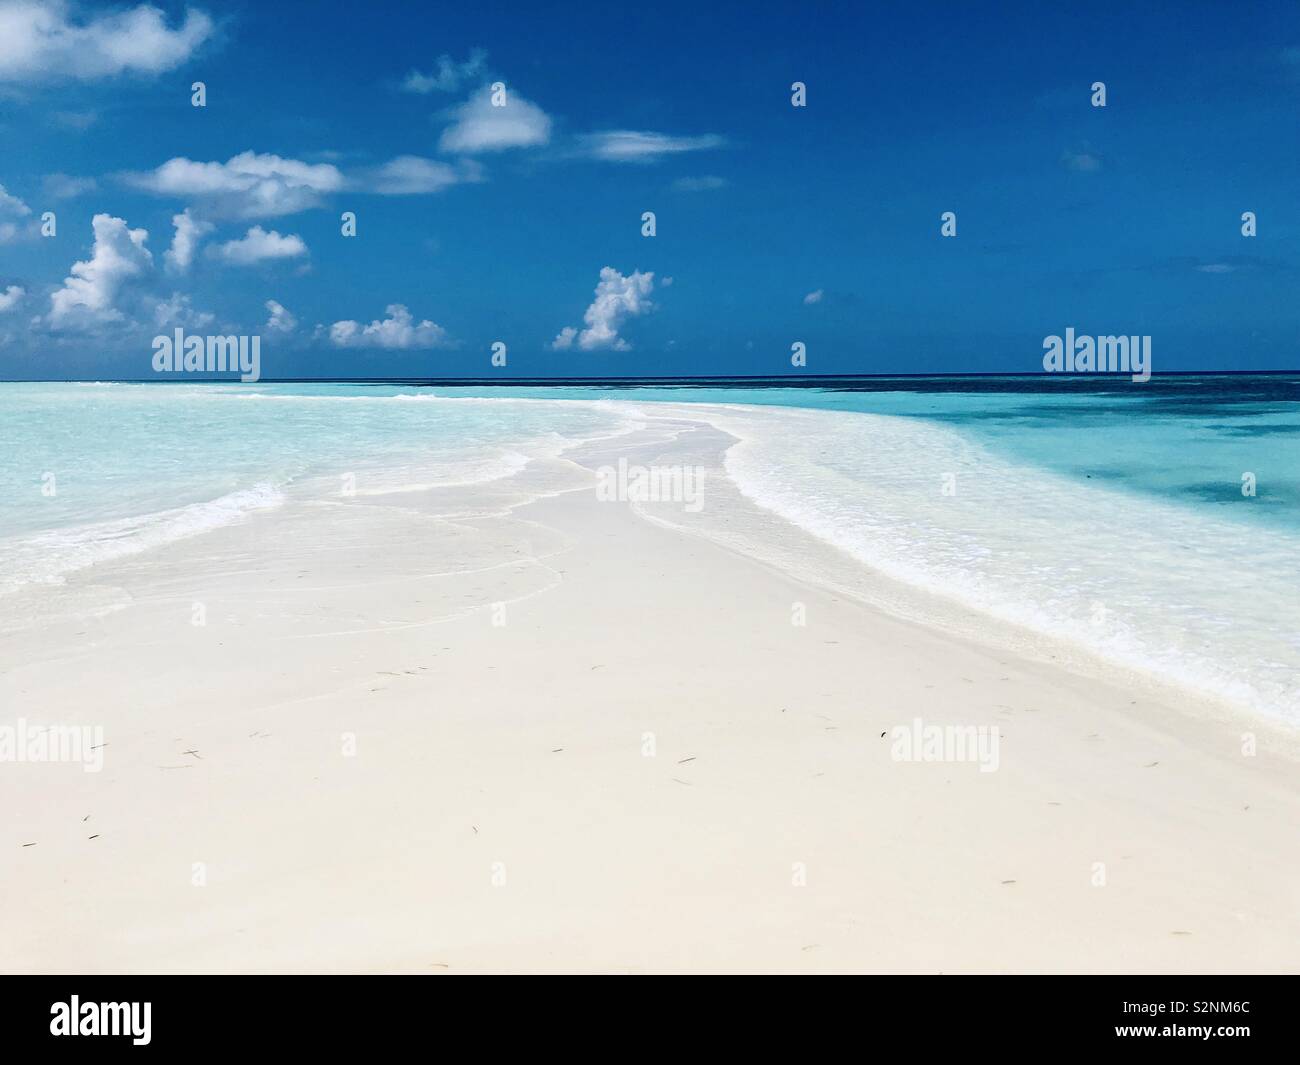 Kuredu Island Resort High Resolution Stock Photography and Images - Alamy